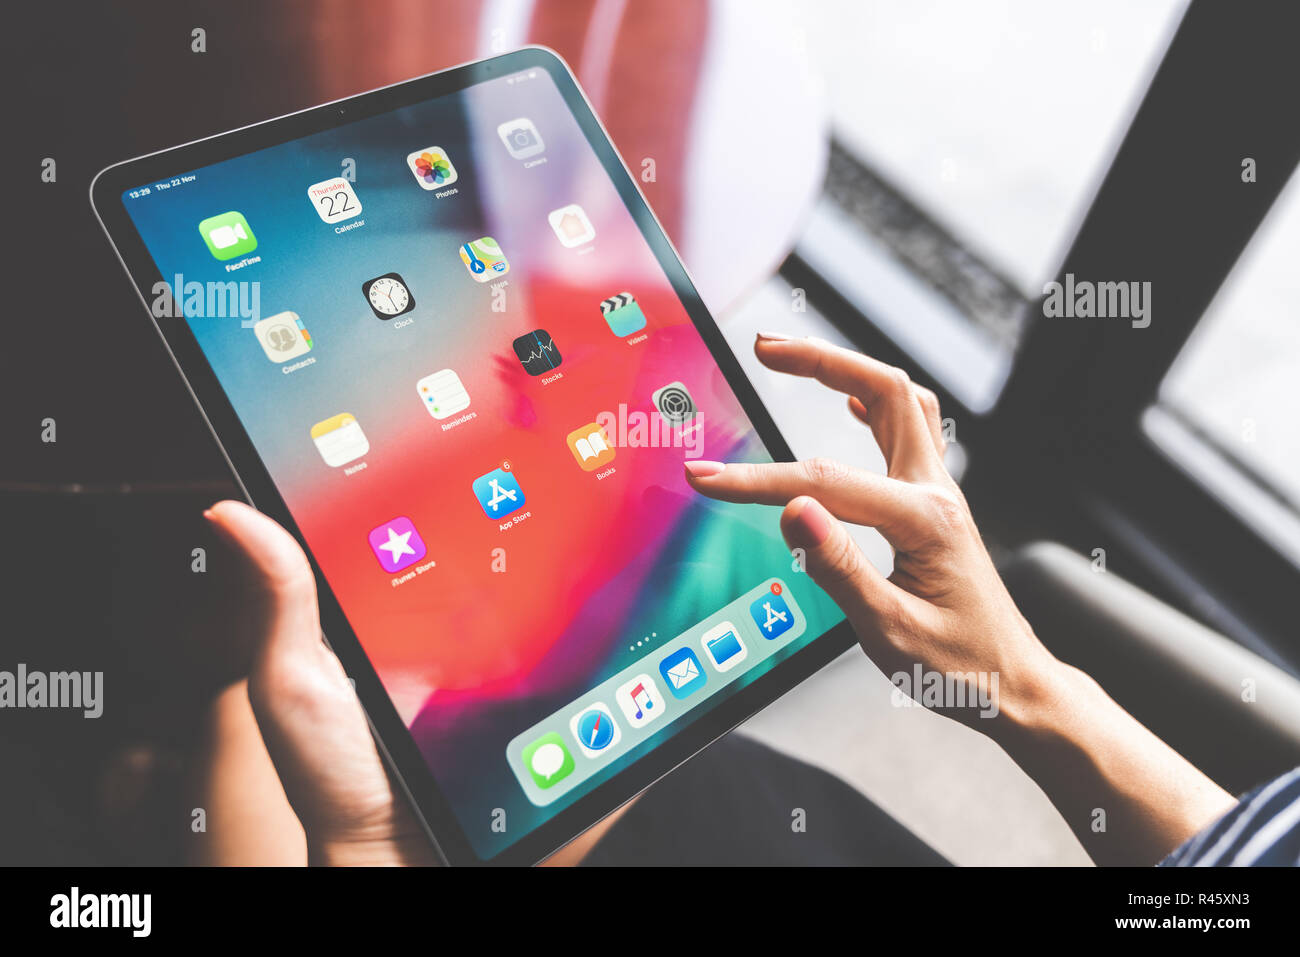 Bangkok, Thailand - Nov 22, 2018: Asian woman using the new 11 inch Apple iPad pro 2018, swiping home screen or touching app icon Stock Photo